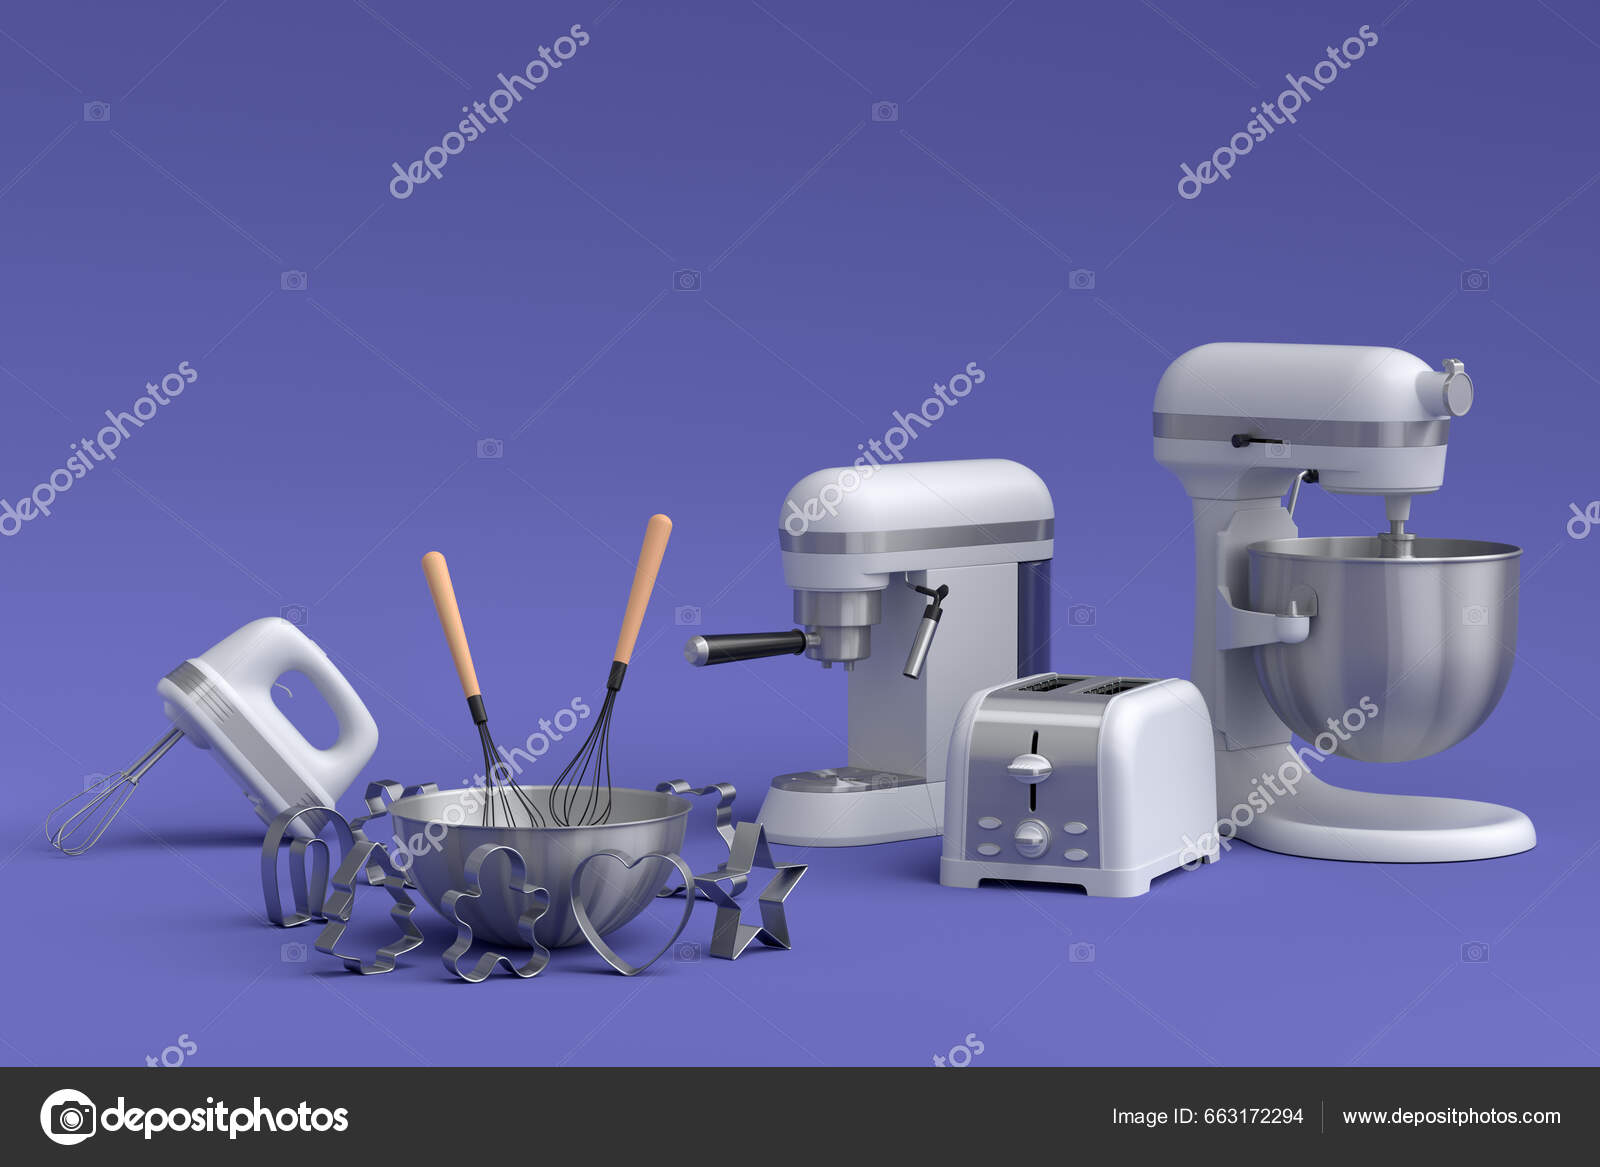 https://st5.depositphotos.com/1616053/66317/i/1600/depositphotos_663172294-stock-photo-mixer-metal-bowl-kitchen-utensil.jpg